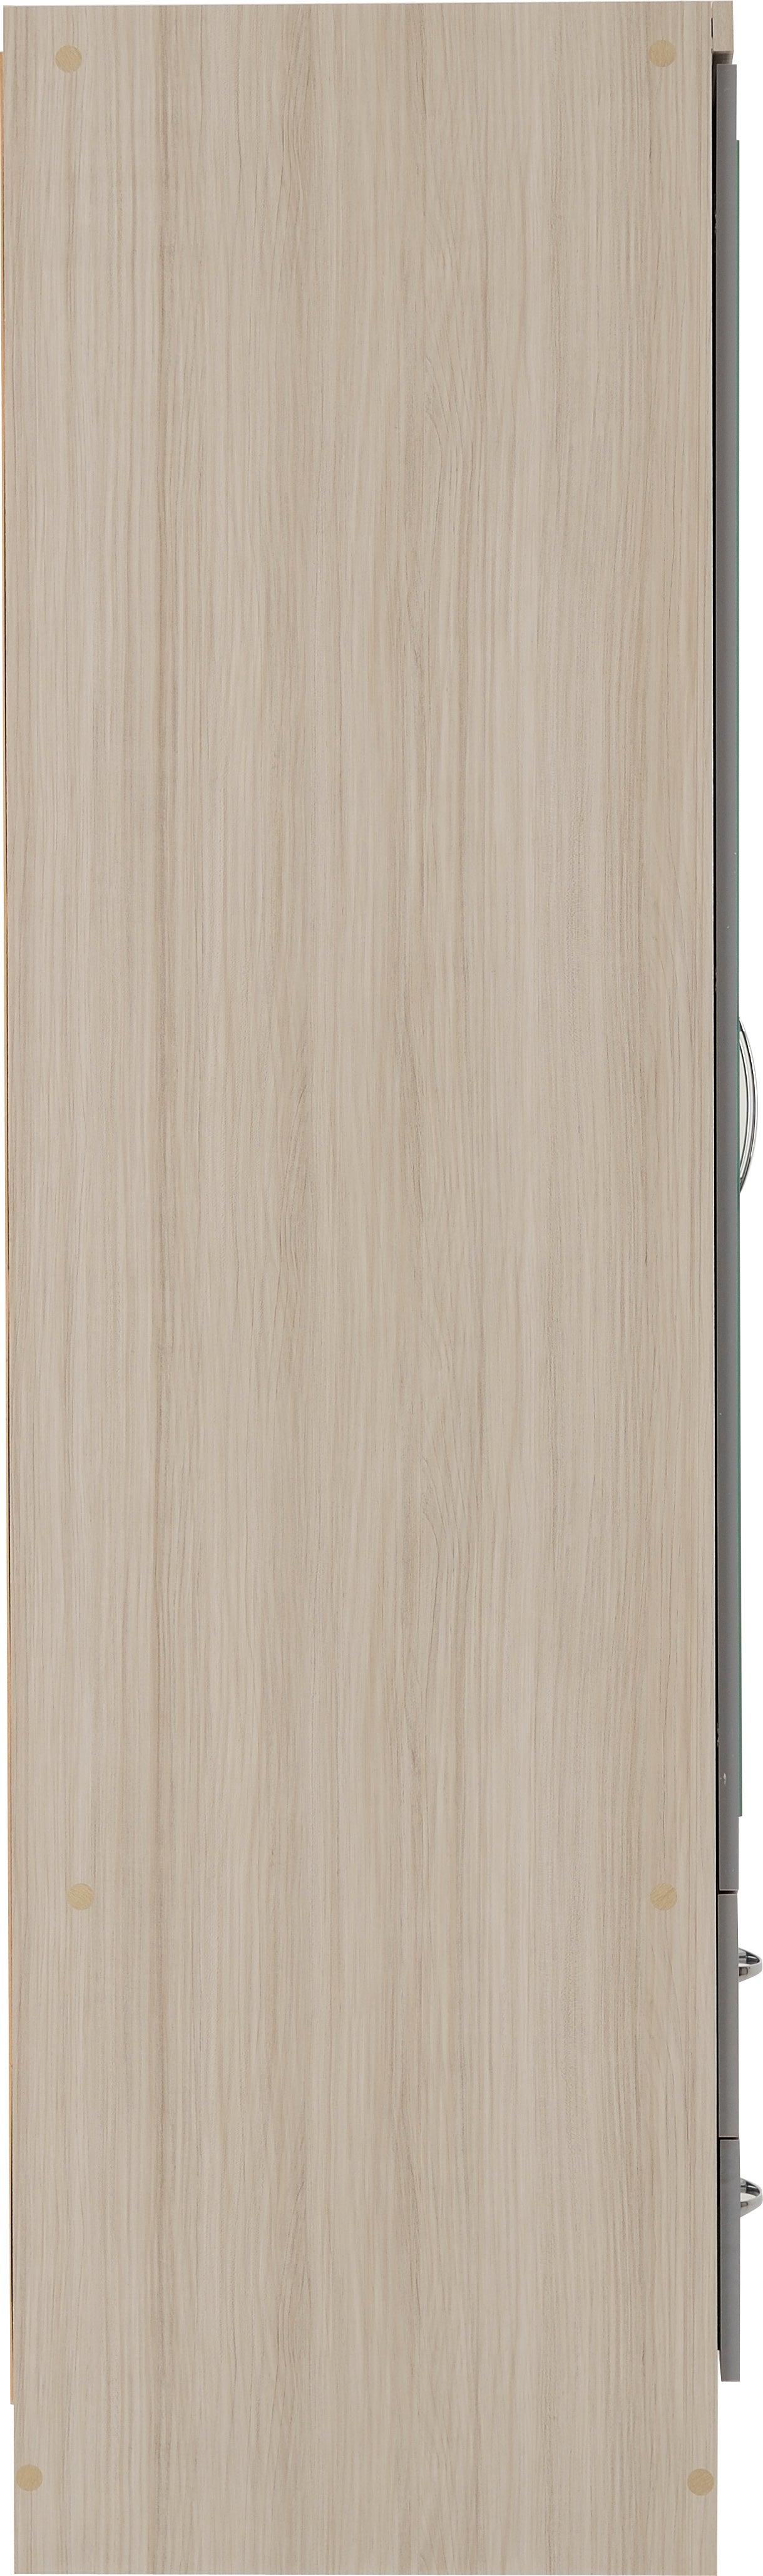 Nevada 3 Door 2 Drawer Mirrored Wardrobe Grey Gloss/Light Oak Effect Veneer